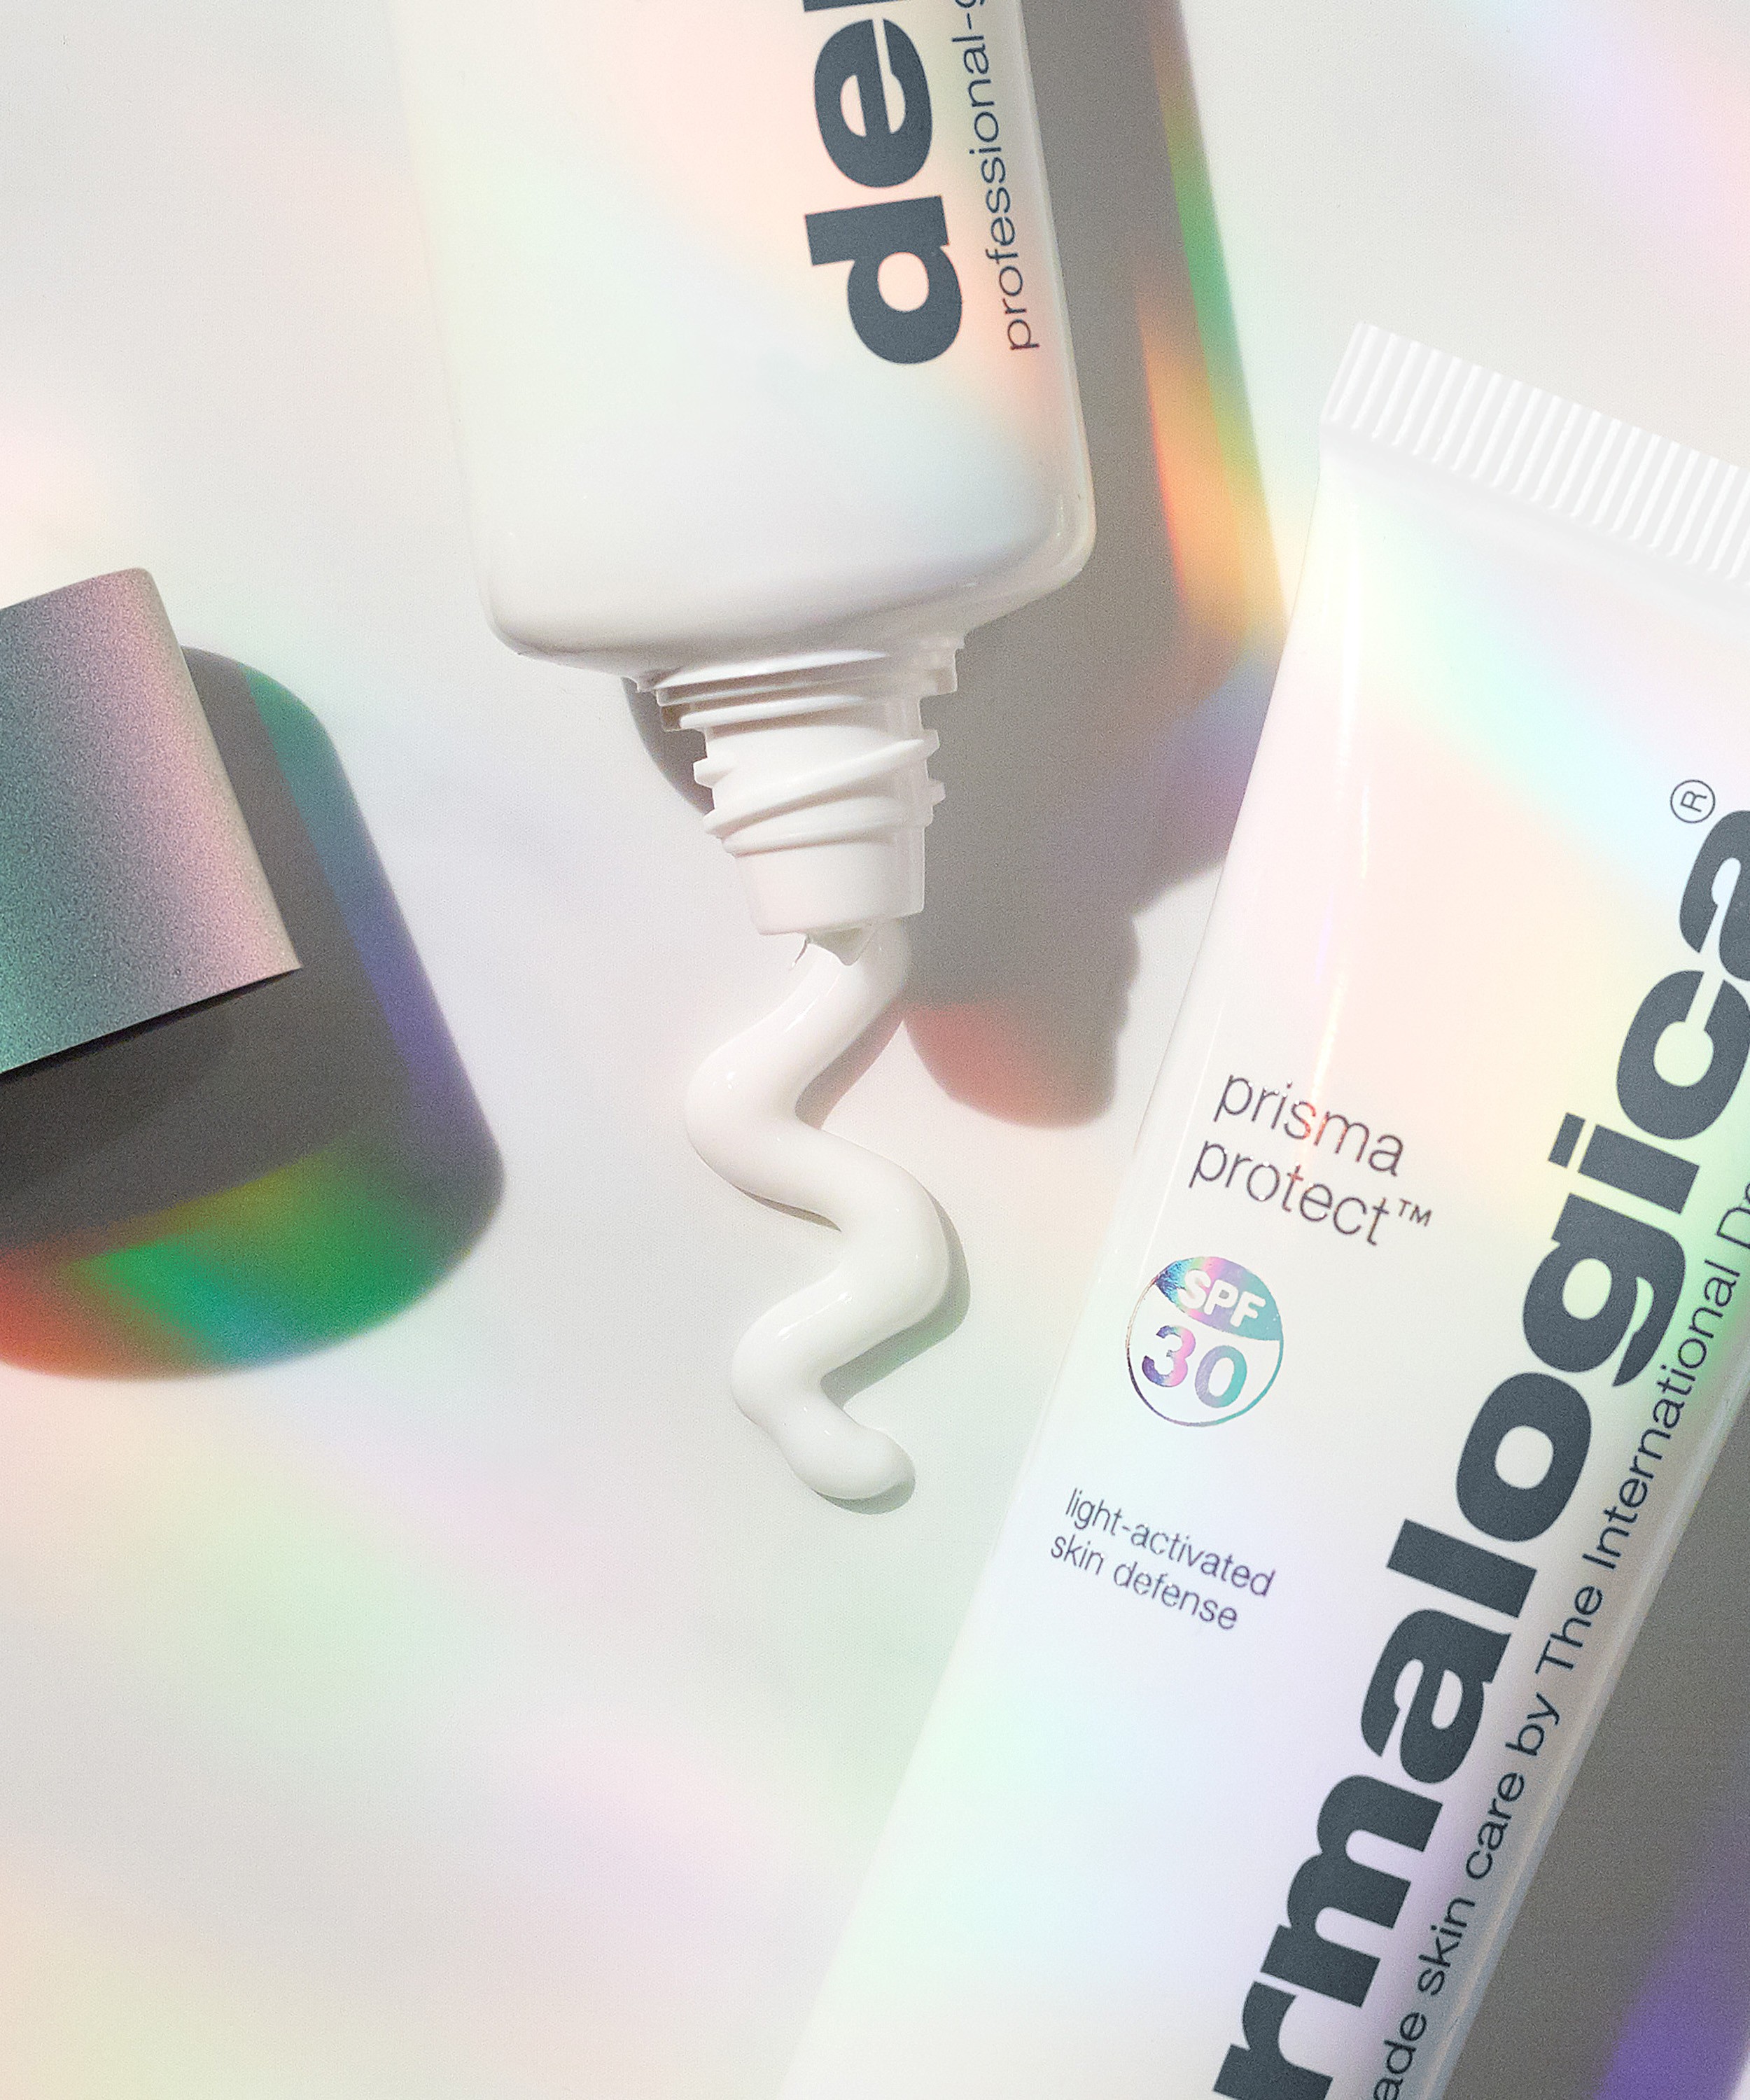 prisma protect spf30 moisturizer